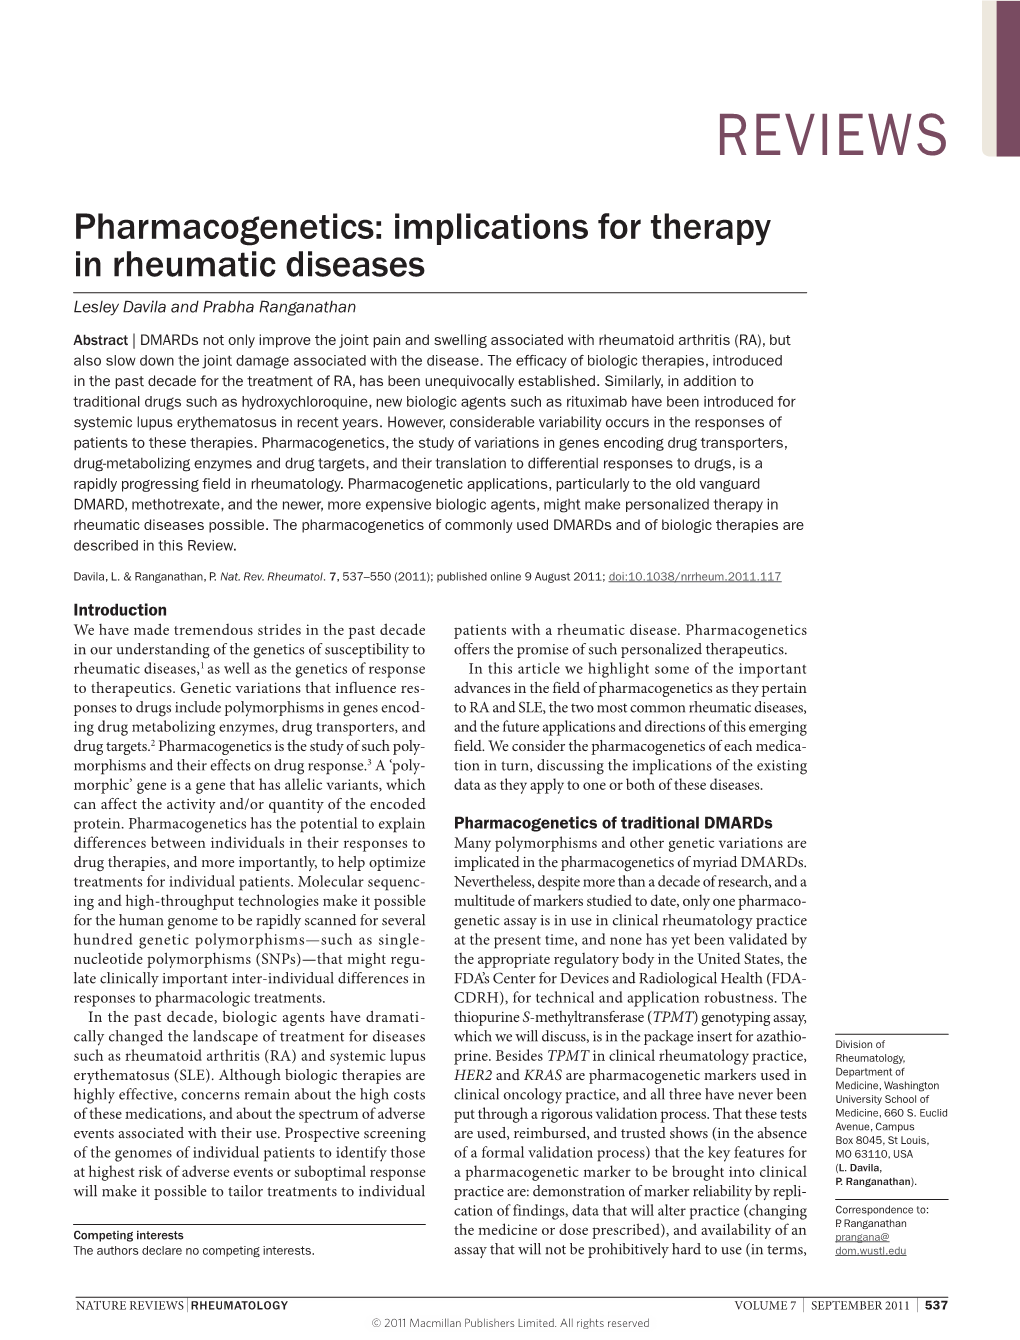 Pharmacogenetics: Implications for Therapy in Rheumatic Diseases Lesley Davila and Prabha Ranganathan